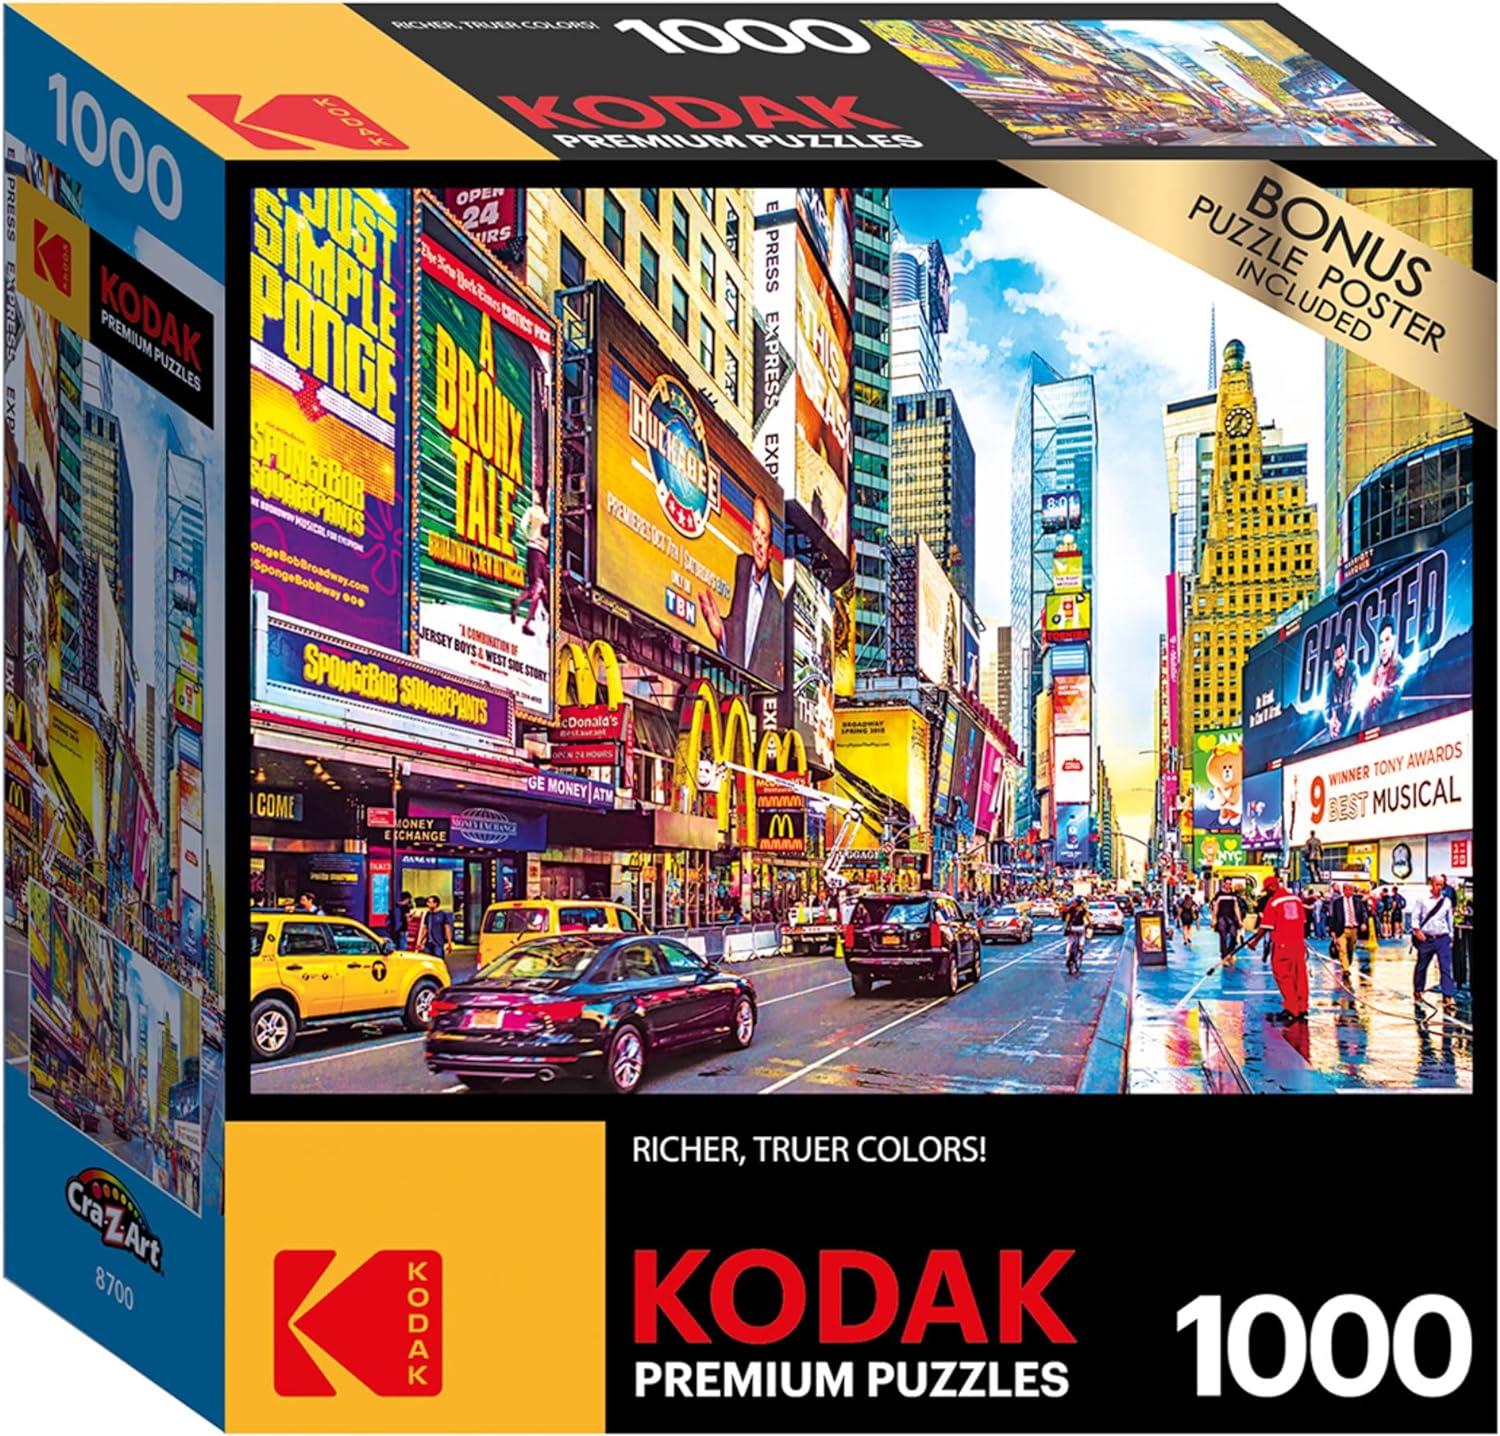 Cra-Z-Art Kodak Times Square 1000 Piece Jigsaw Puzzle for $5.92